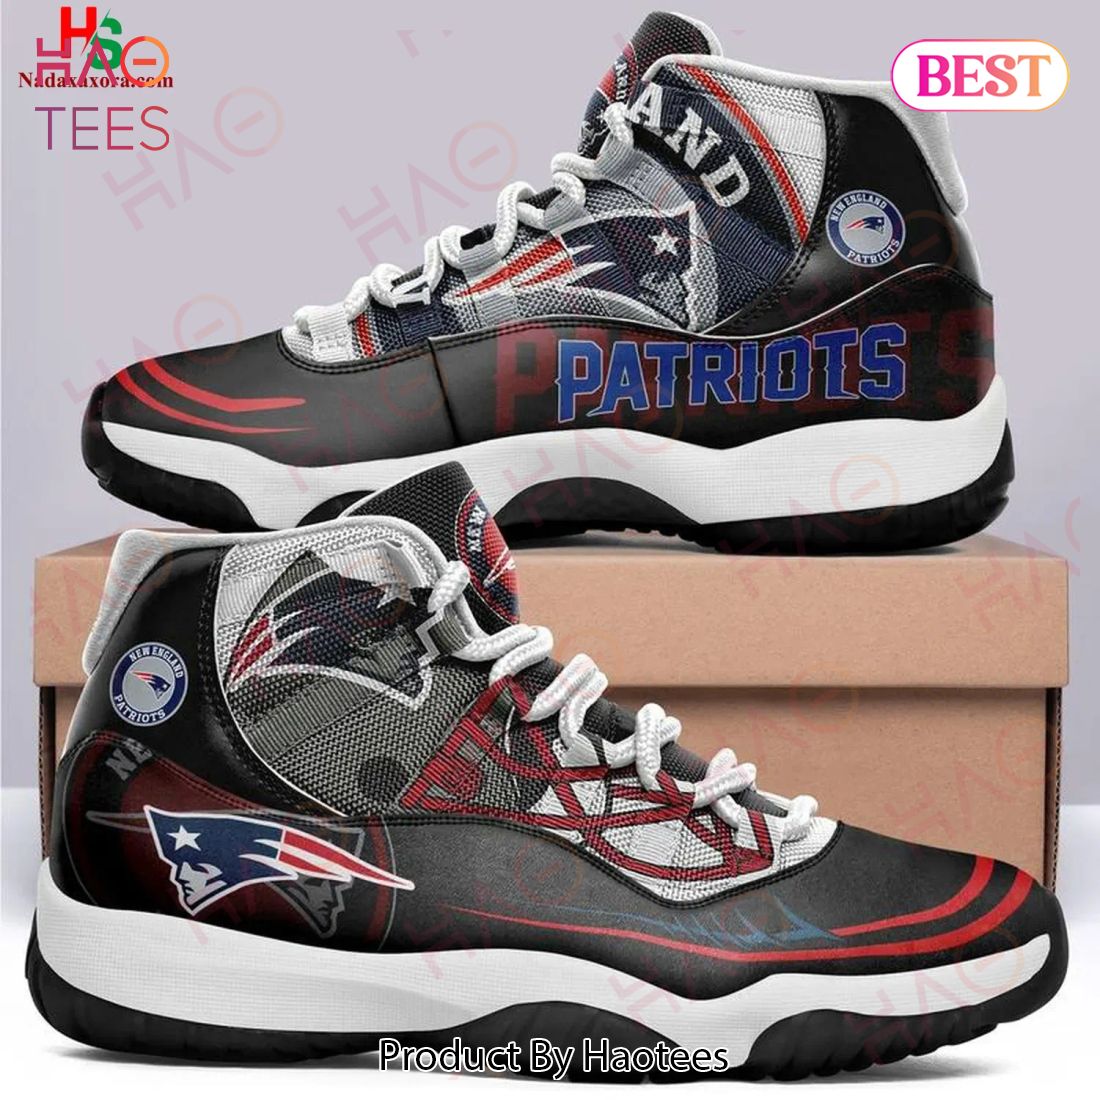 NFL New England Patriots Football Team Air Jordan 11 Sneakers Shoes